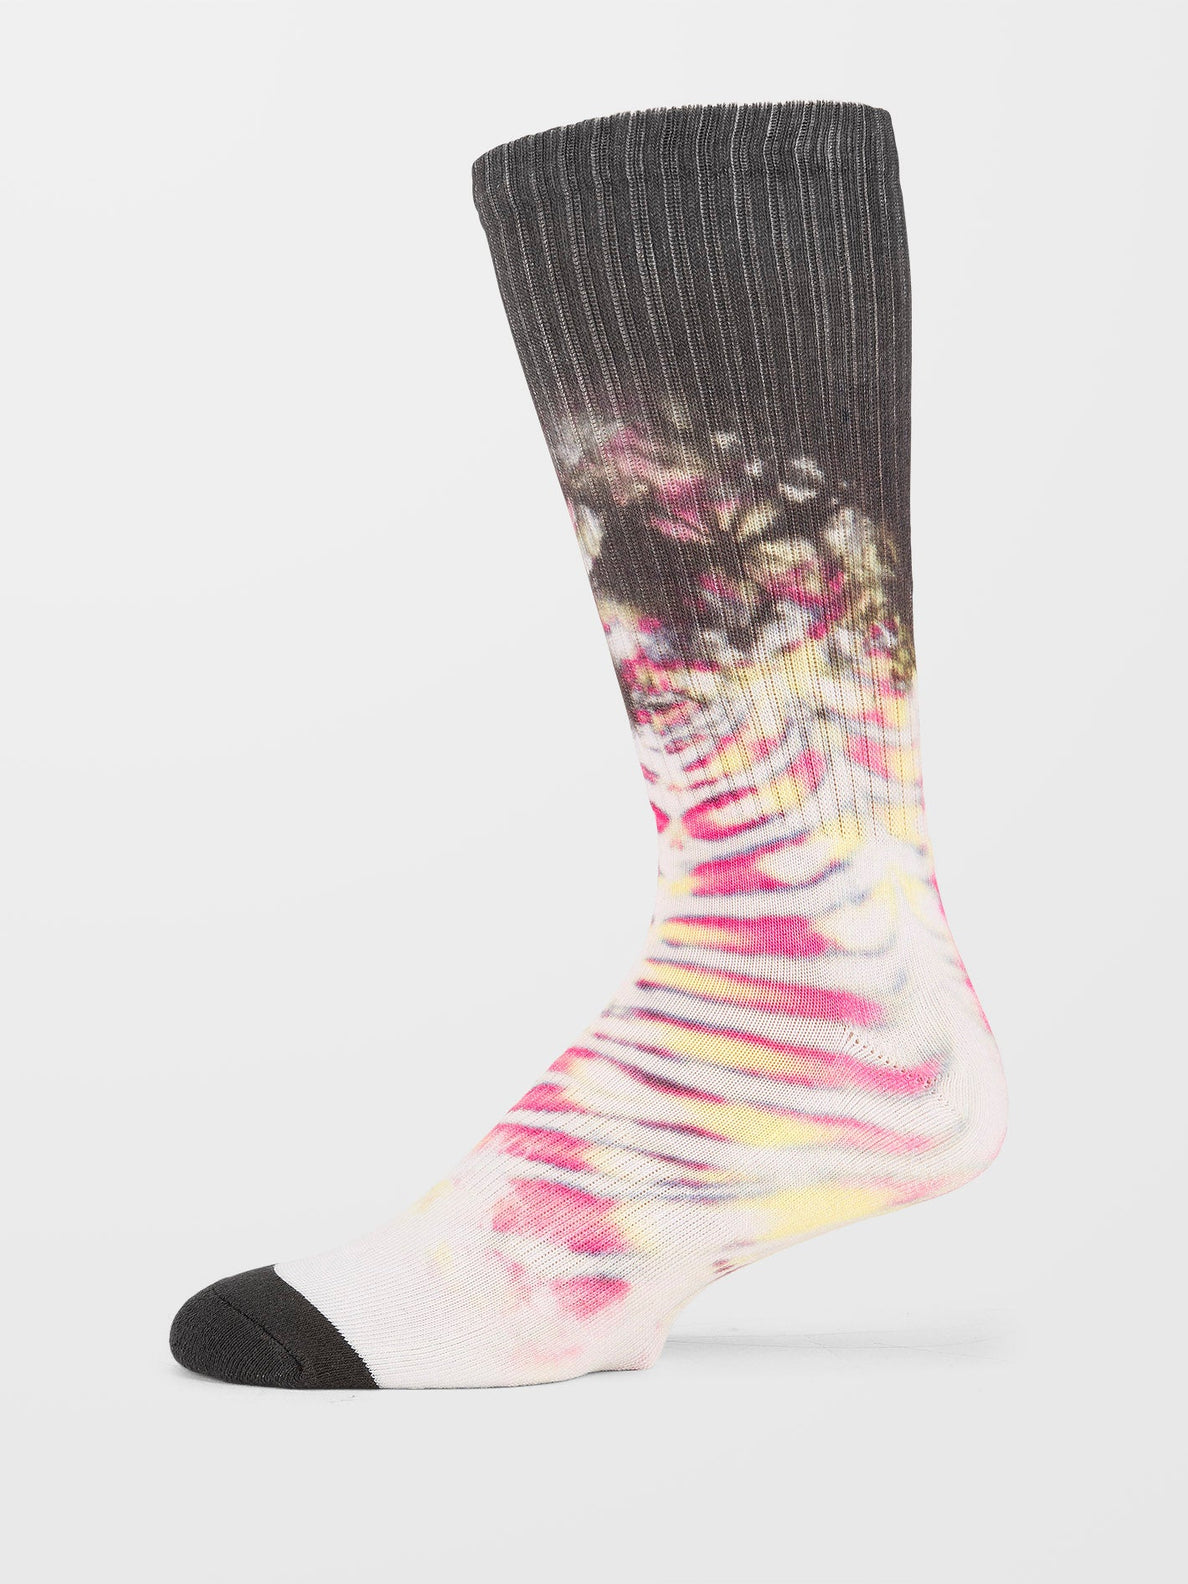 Volcom Mad Wash Sock Premium Reef Pink | Meistverkaufte Produkte | Neue Produkte | Neueste Produkte | Sammlung_Zalando | Socken | Volcom-Shop | surfdevils.com